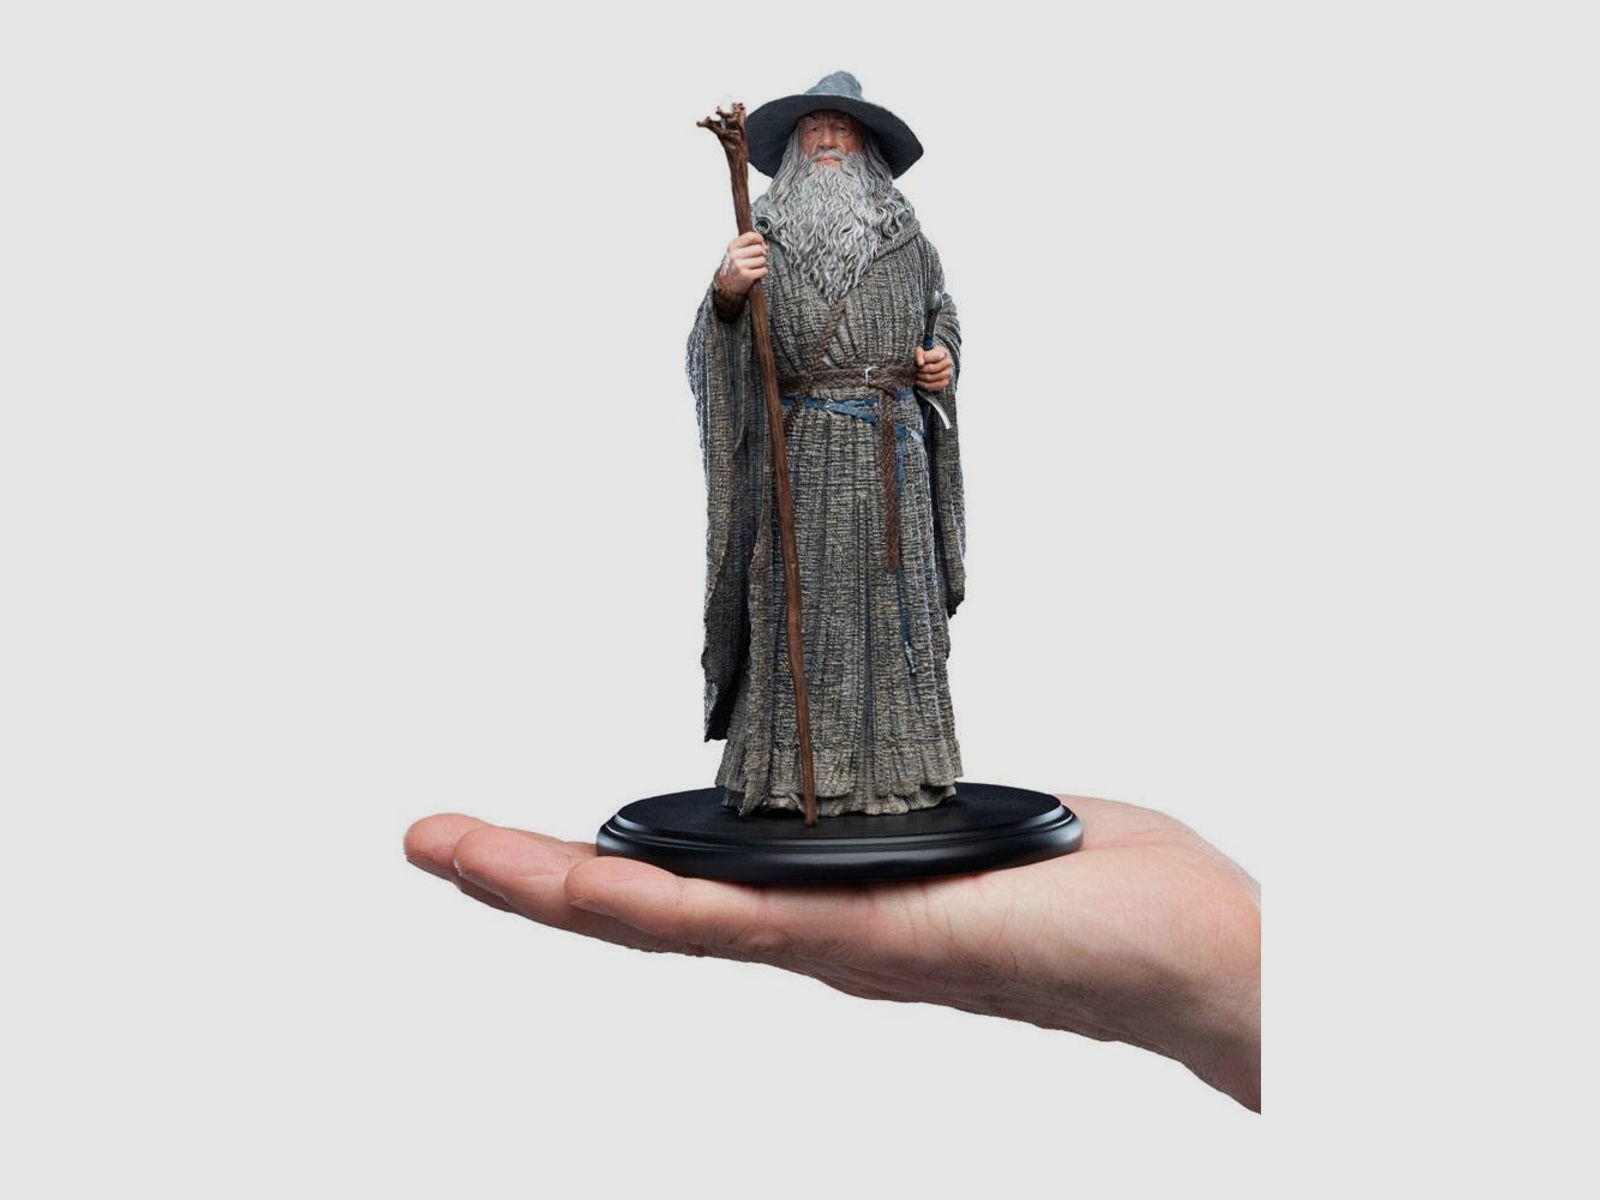 Herr der Ringe Mini Statue Gandalf der Graue 19 cm | 42790